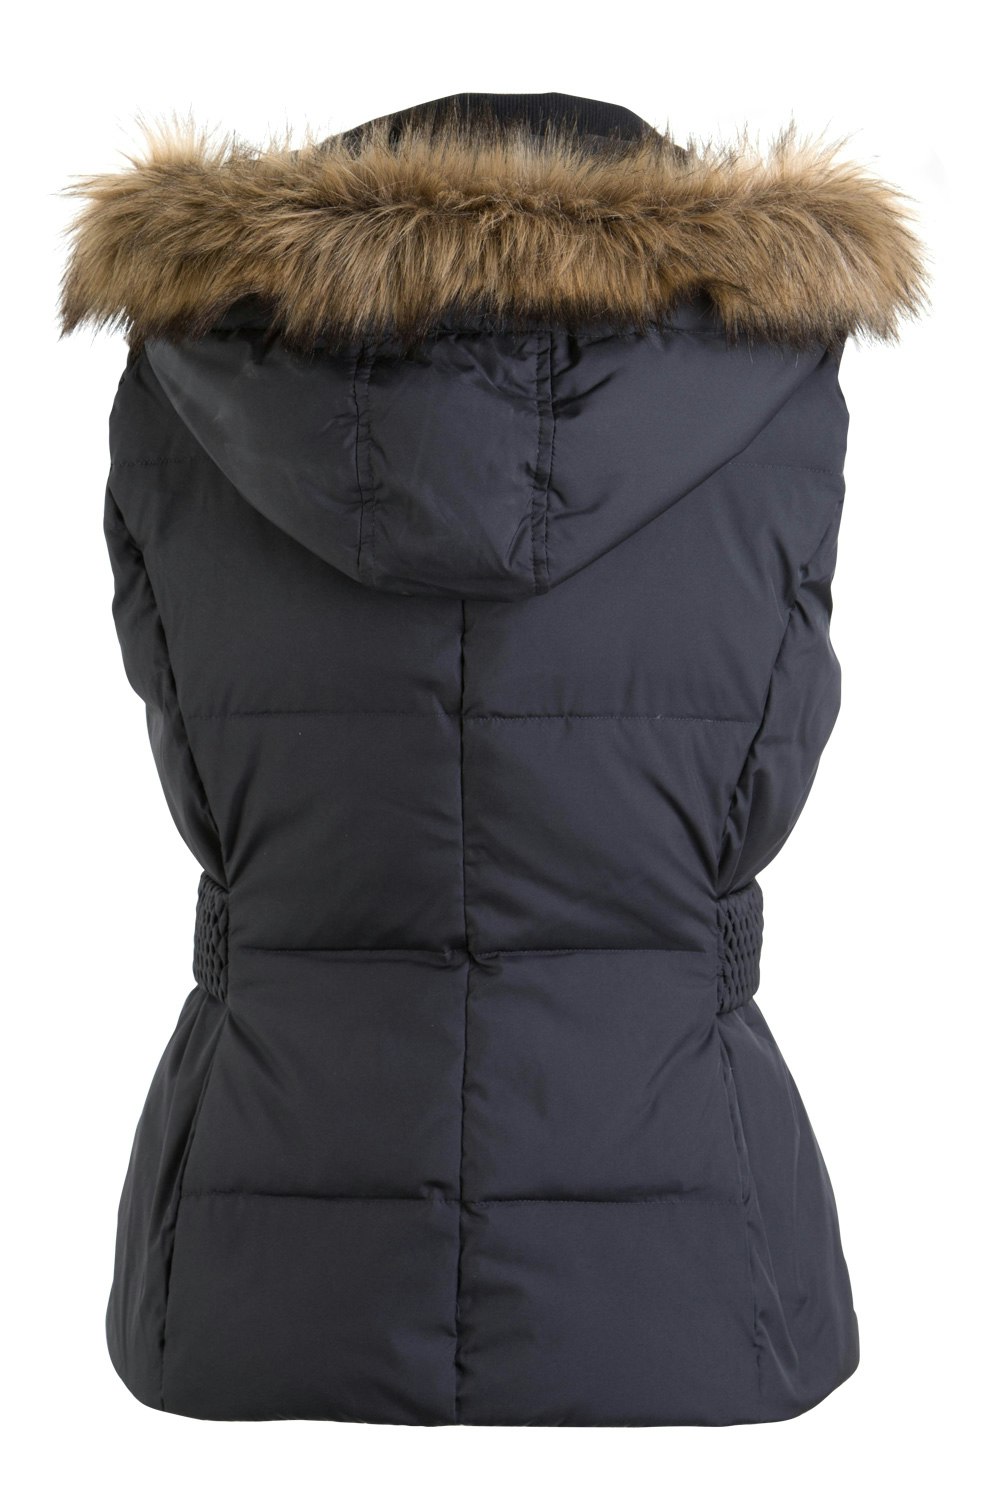 Esprit clothing Fur Hood Vest - Womens Vests - Birdsnest Fashion Clothing